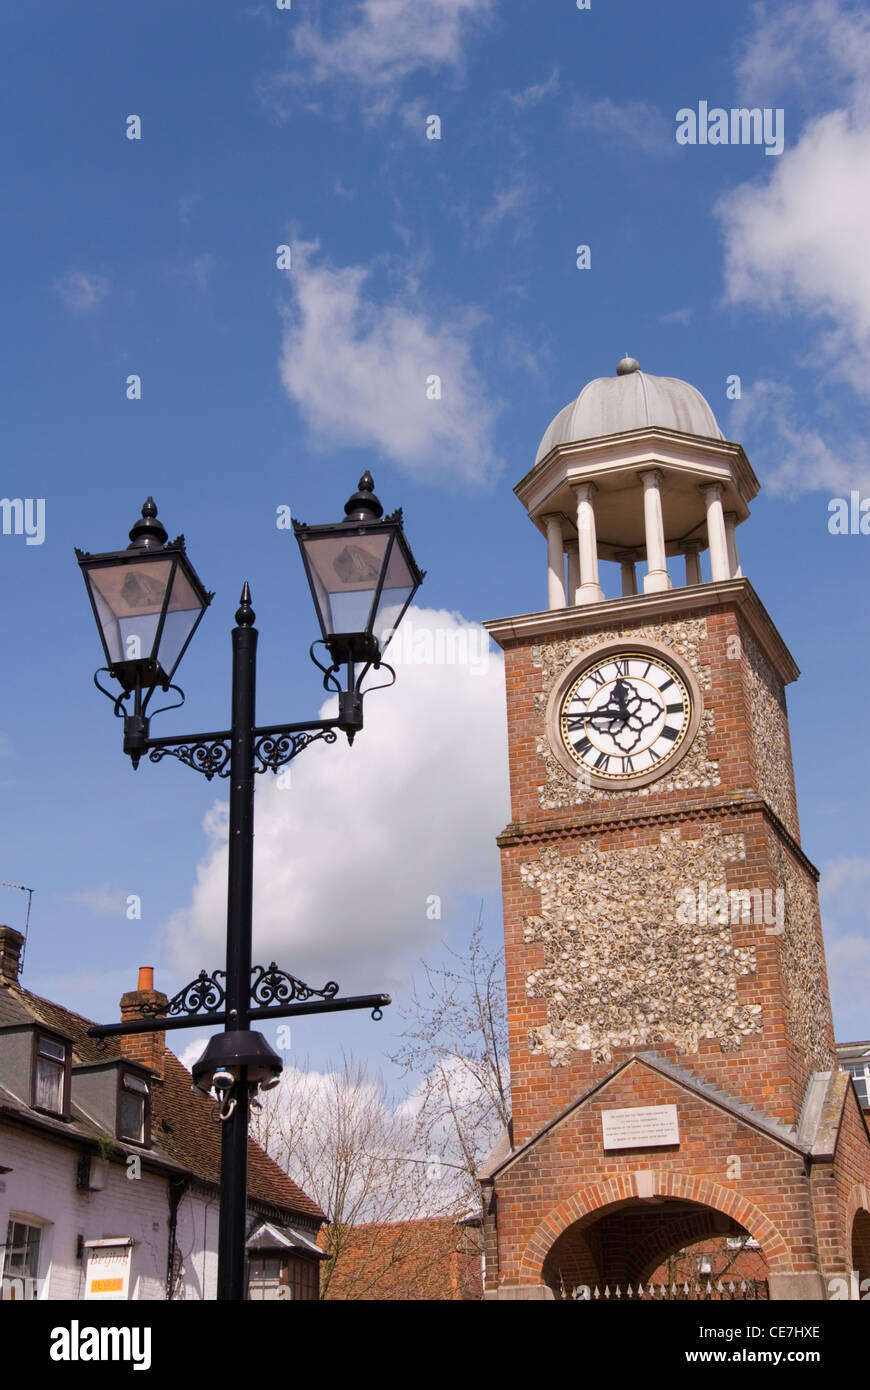 Chesham - Bucks. Town clock tower and decorative ironwork street lamps - viewed against blue sky Stock Photo